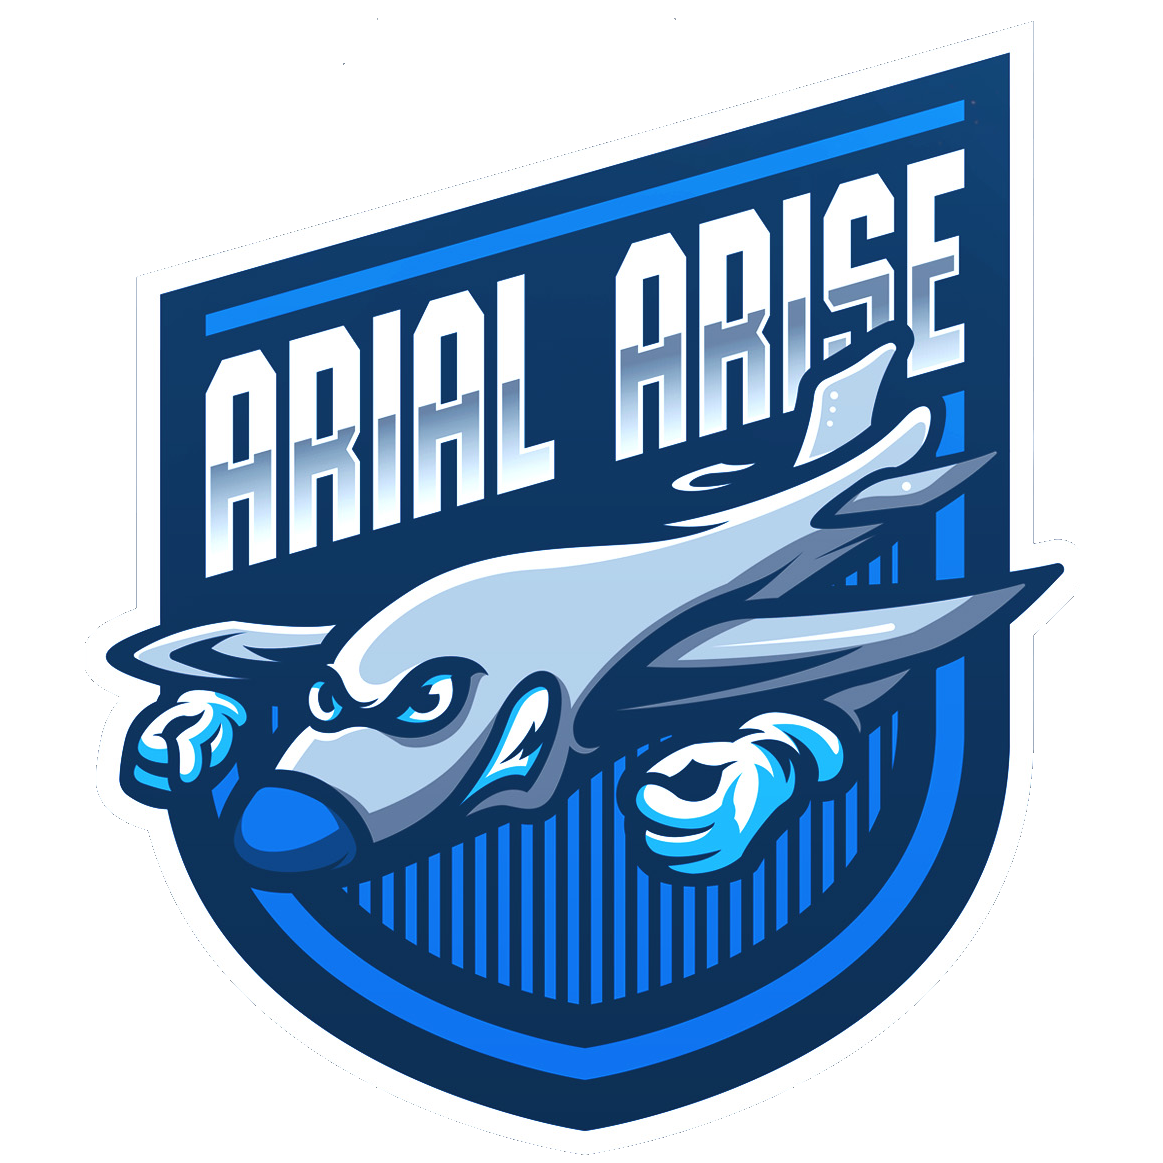 Arial Arise logo